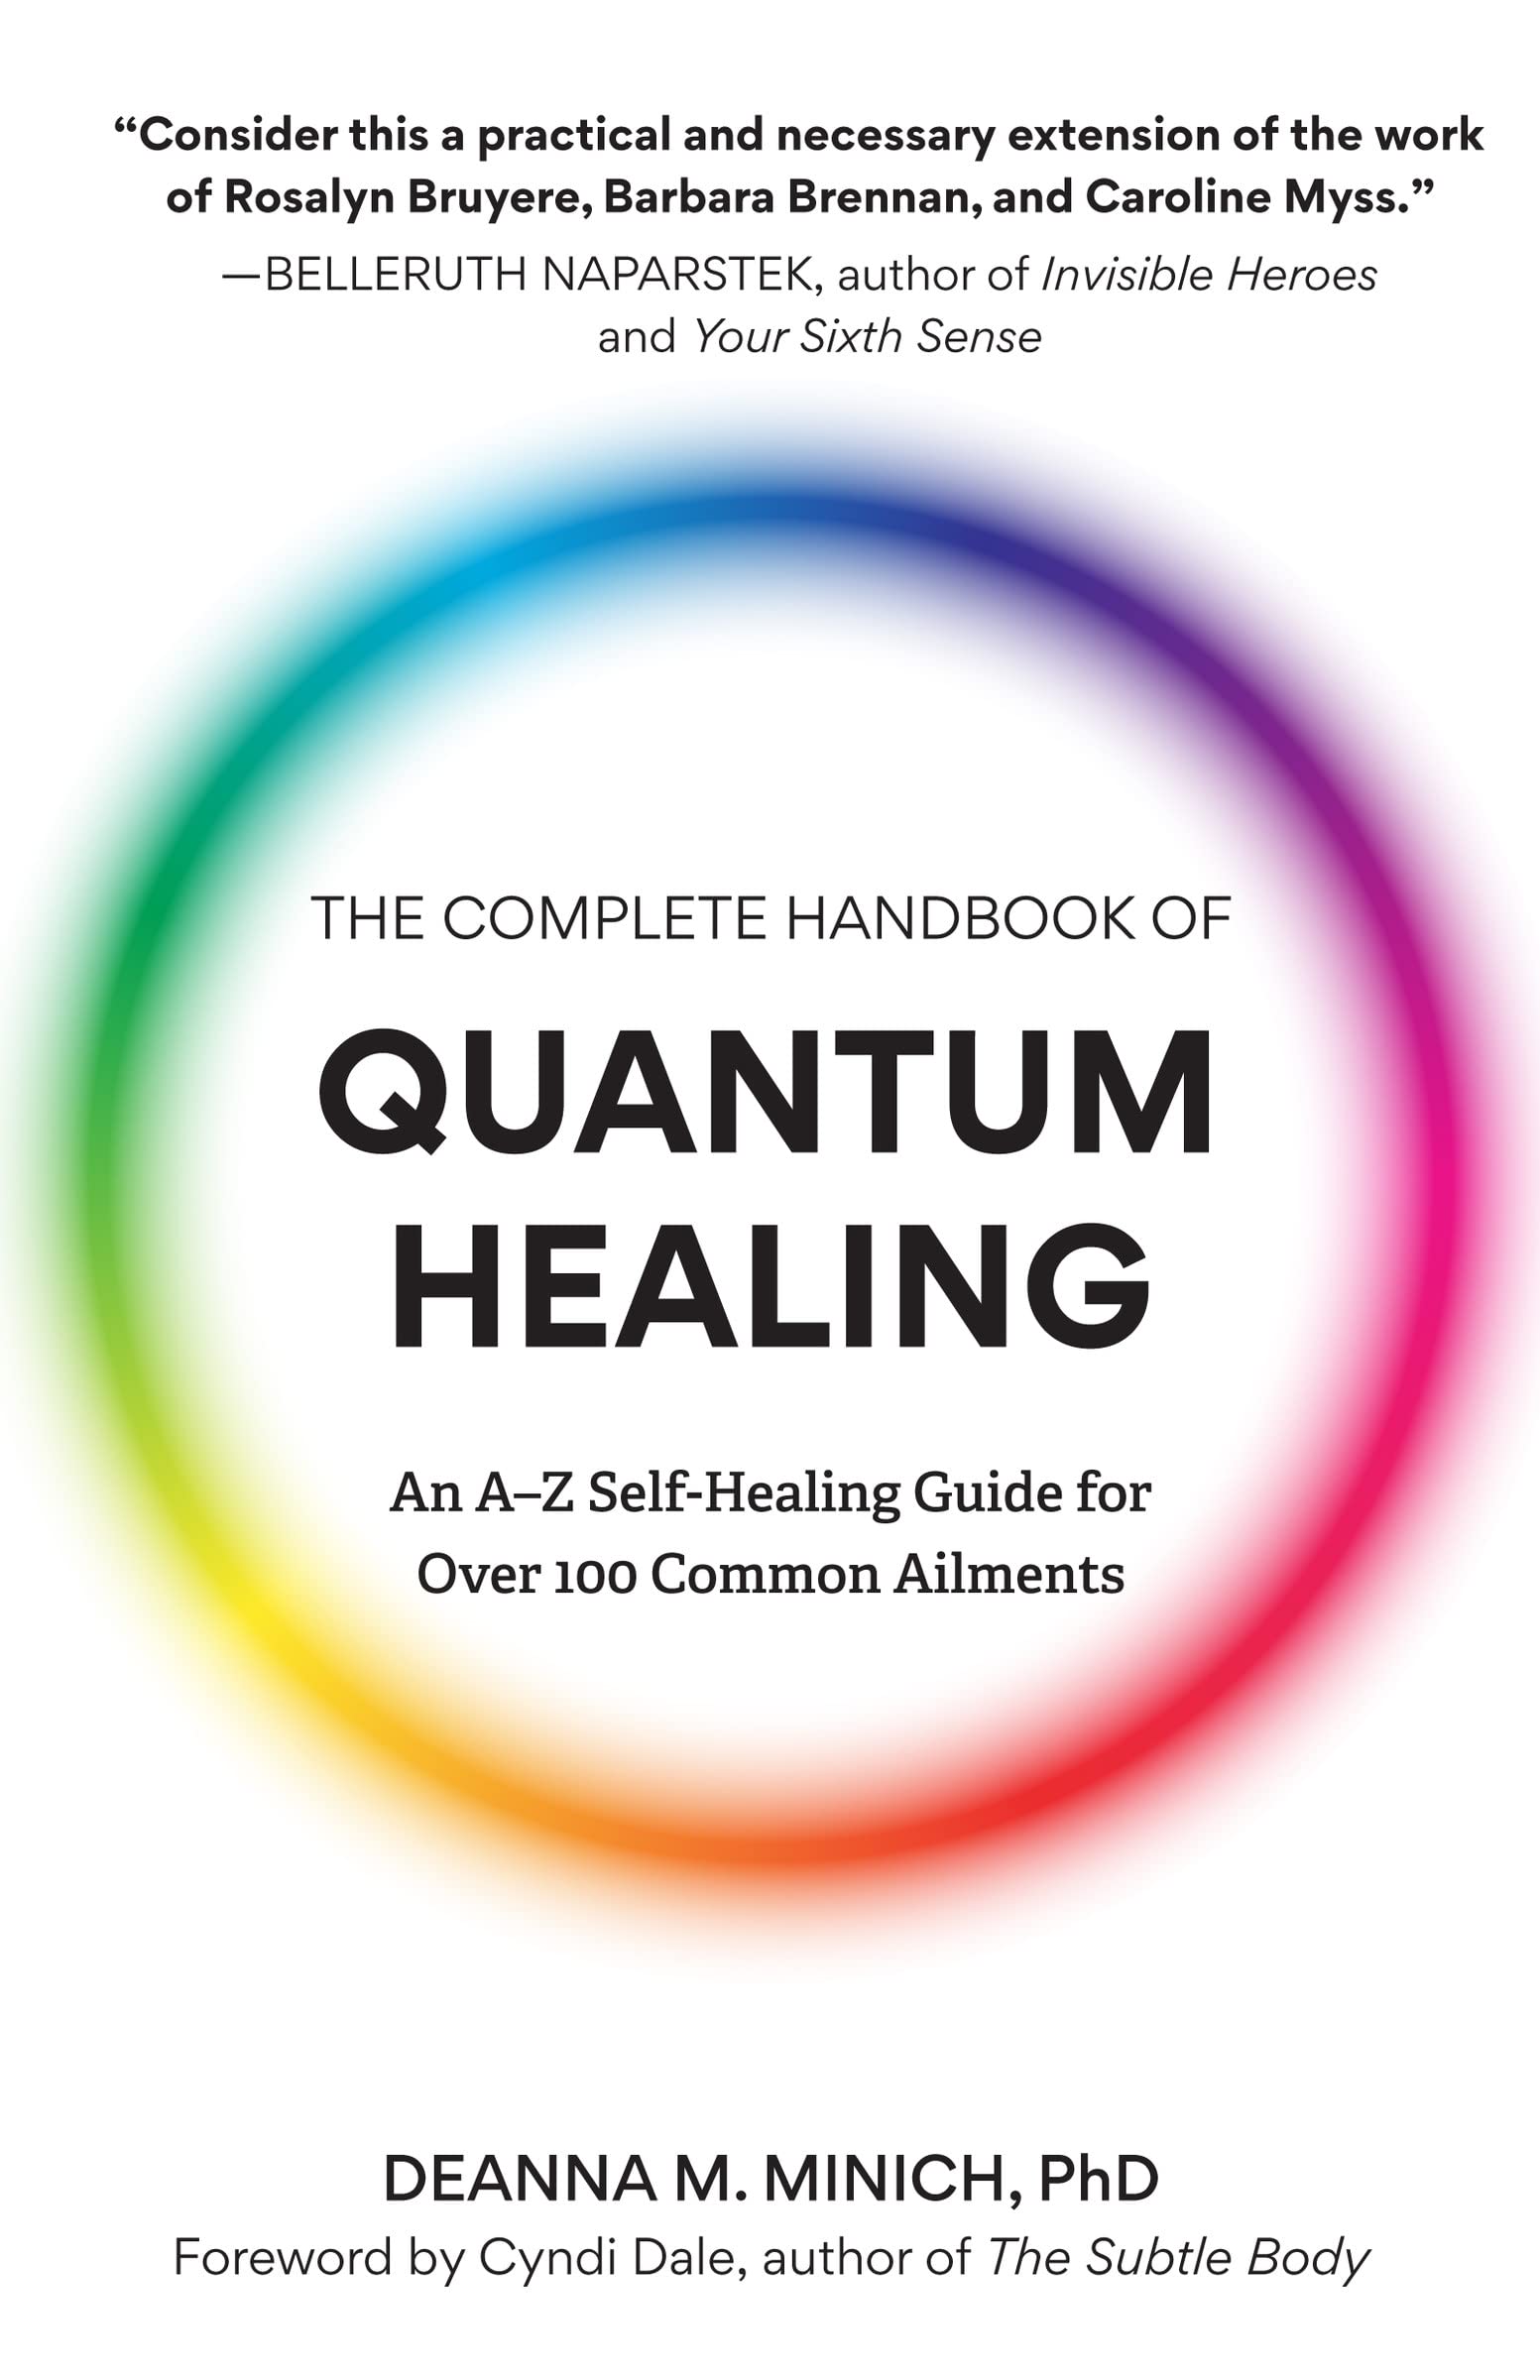 The Complete Handbook of Quantum Healing: An A-Z Self-Healing Guide - SureShot Books Publishing LLC